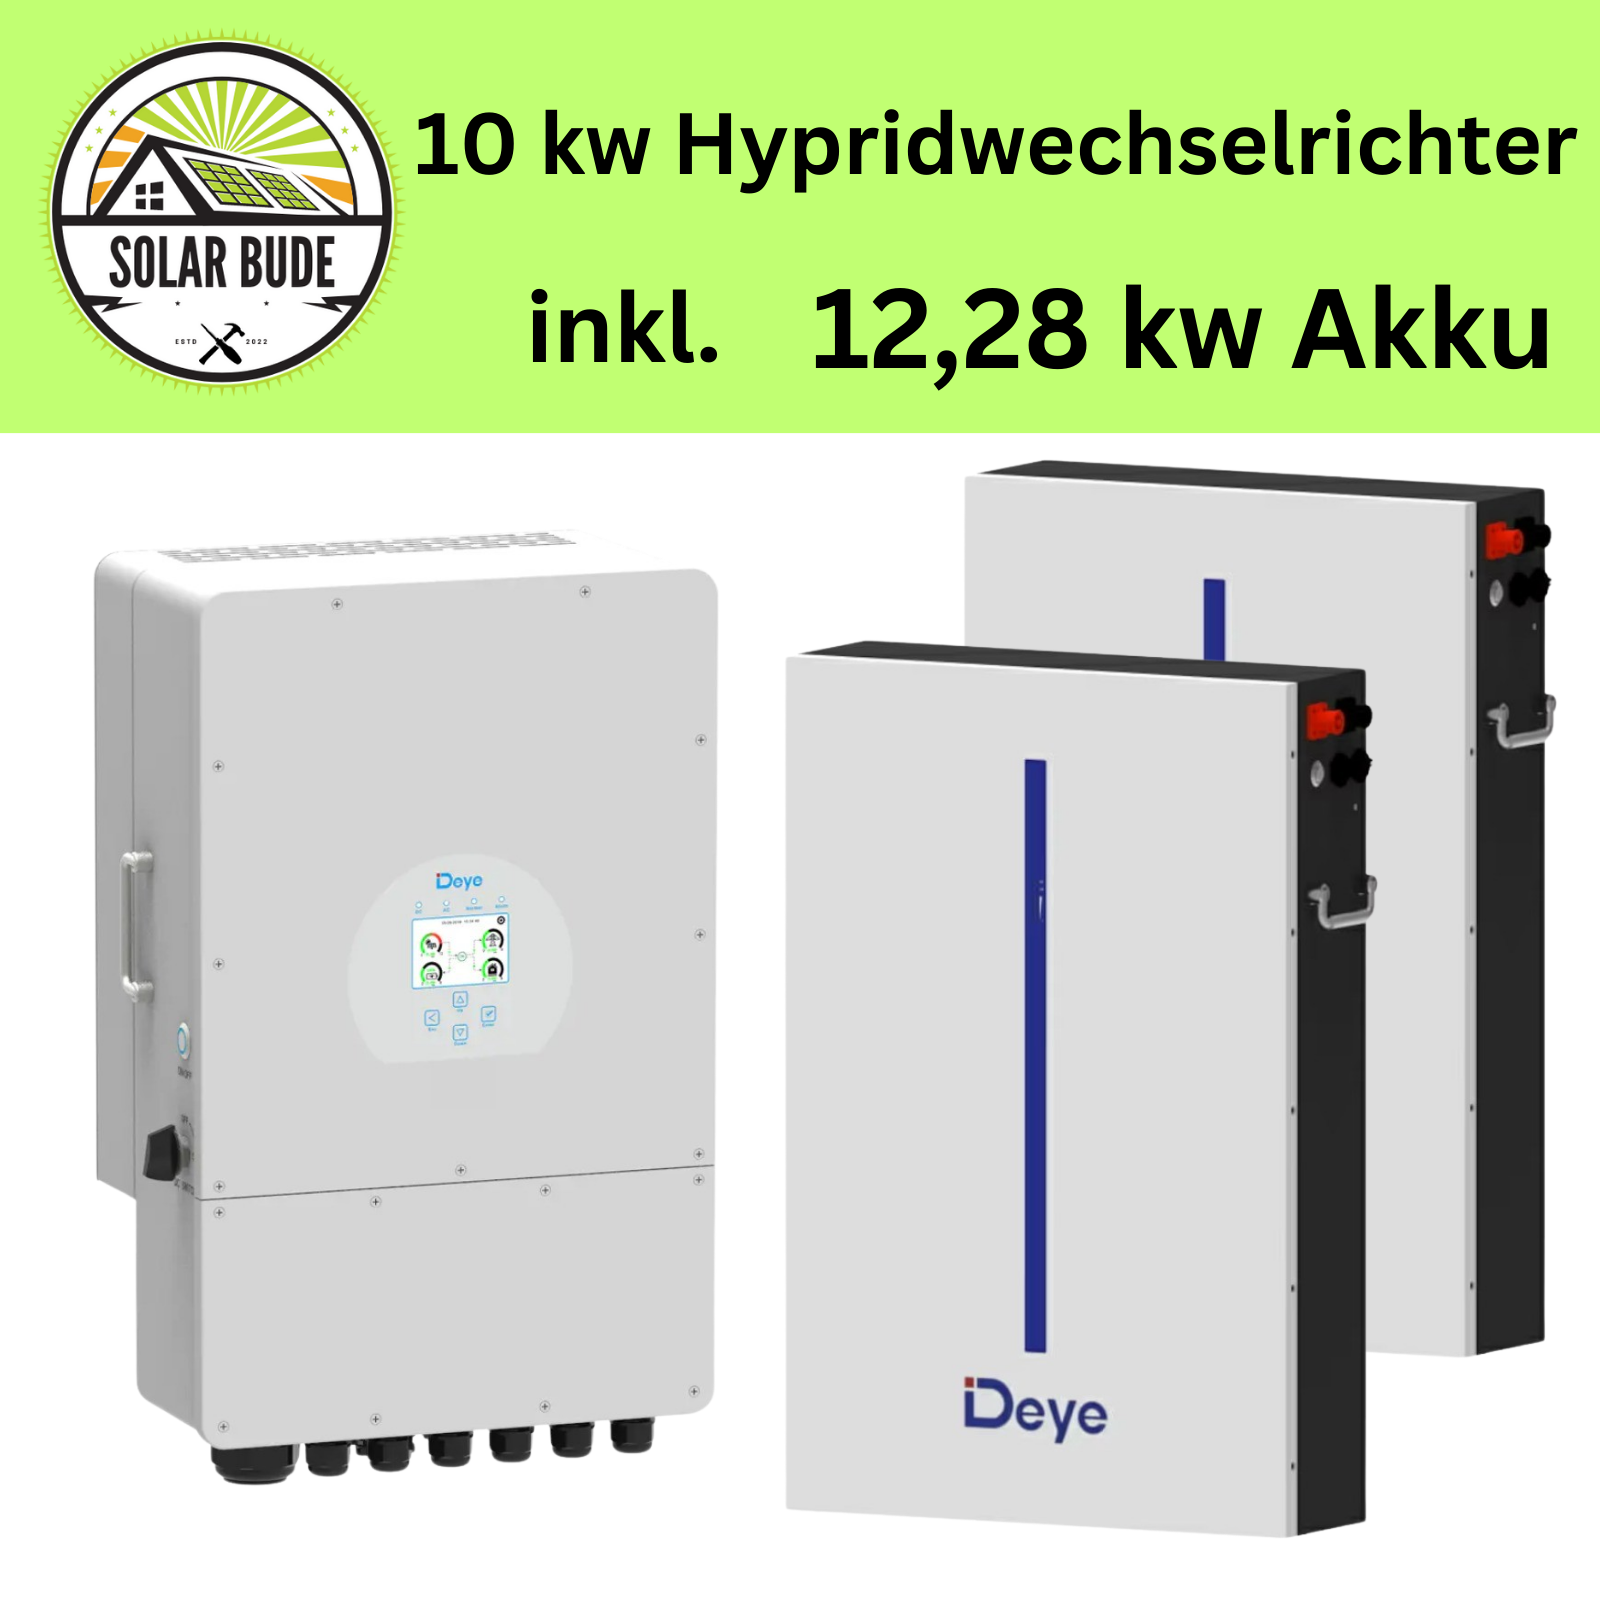 Deye 10 KW Hybrid Wechselrichter + Deye Batterie Speicher Akku